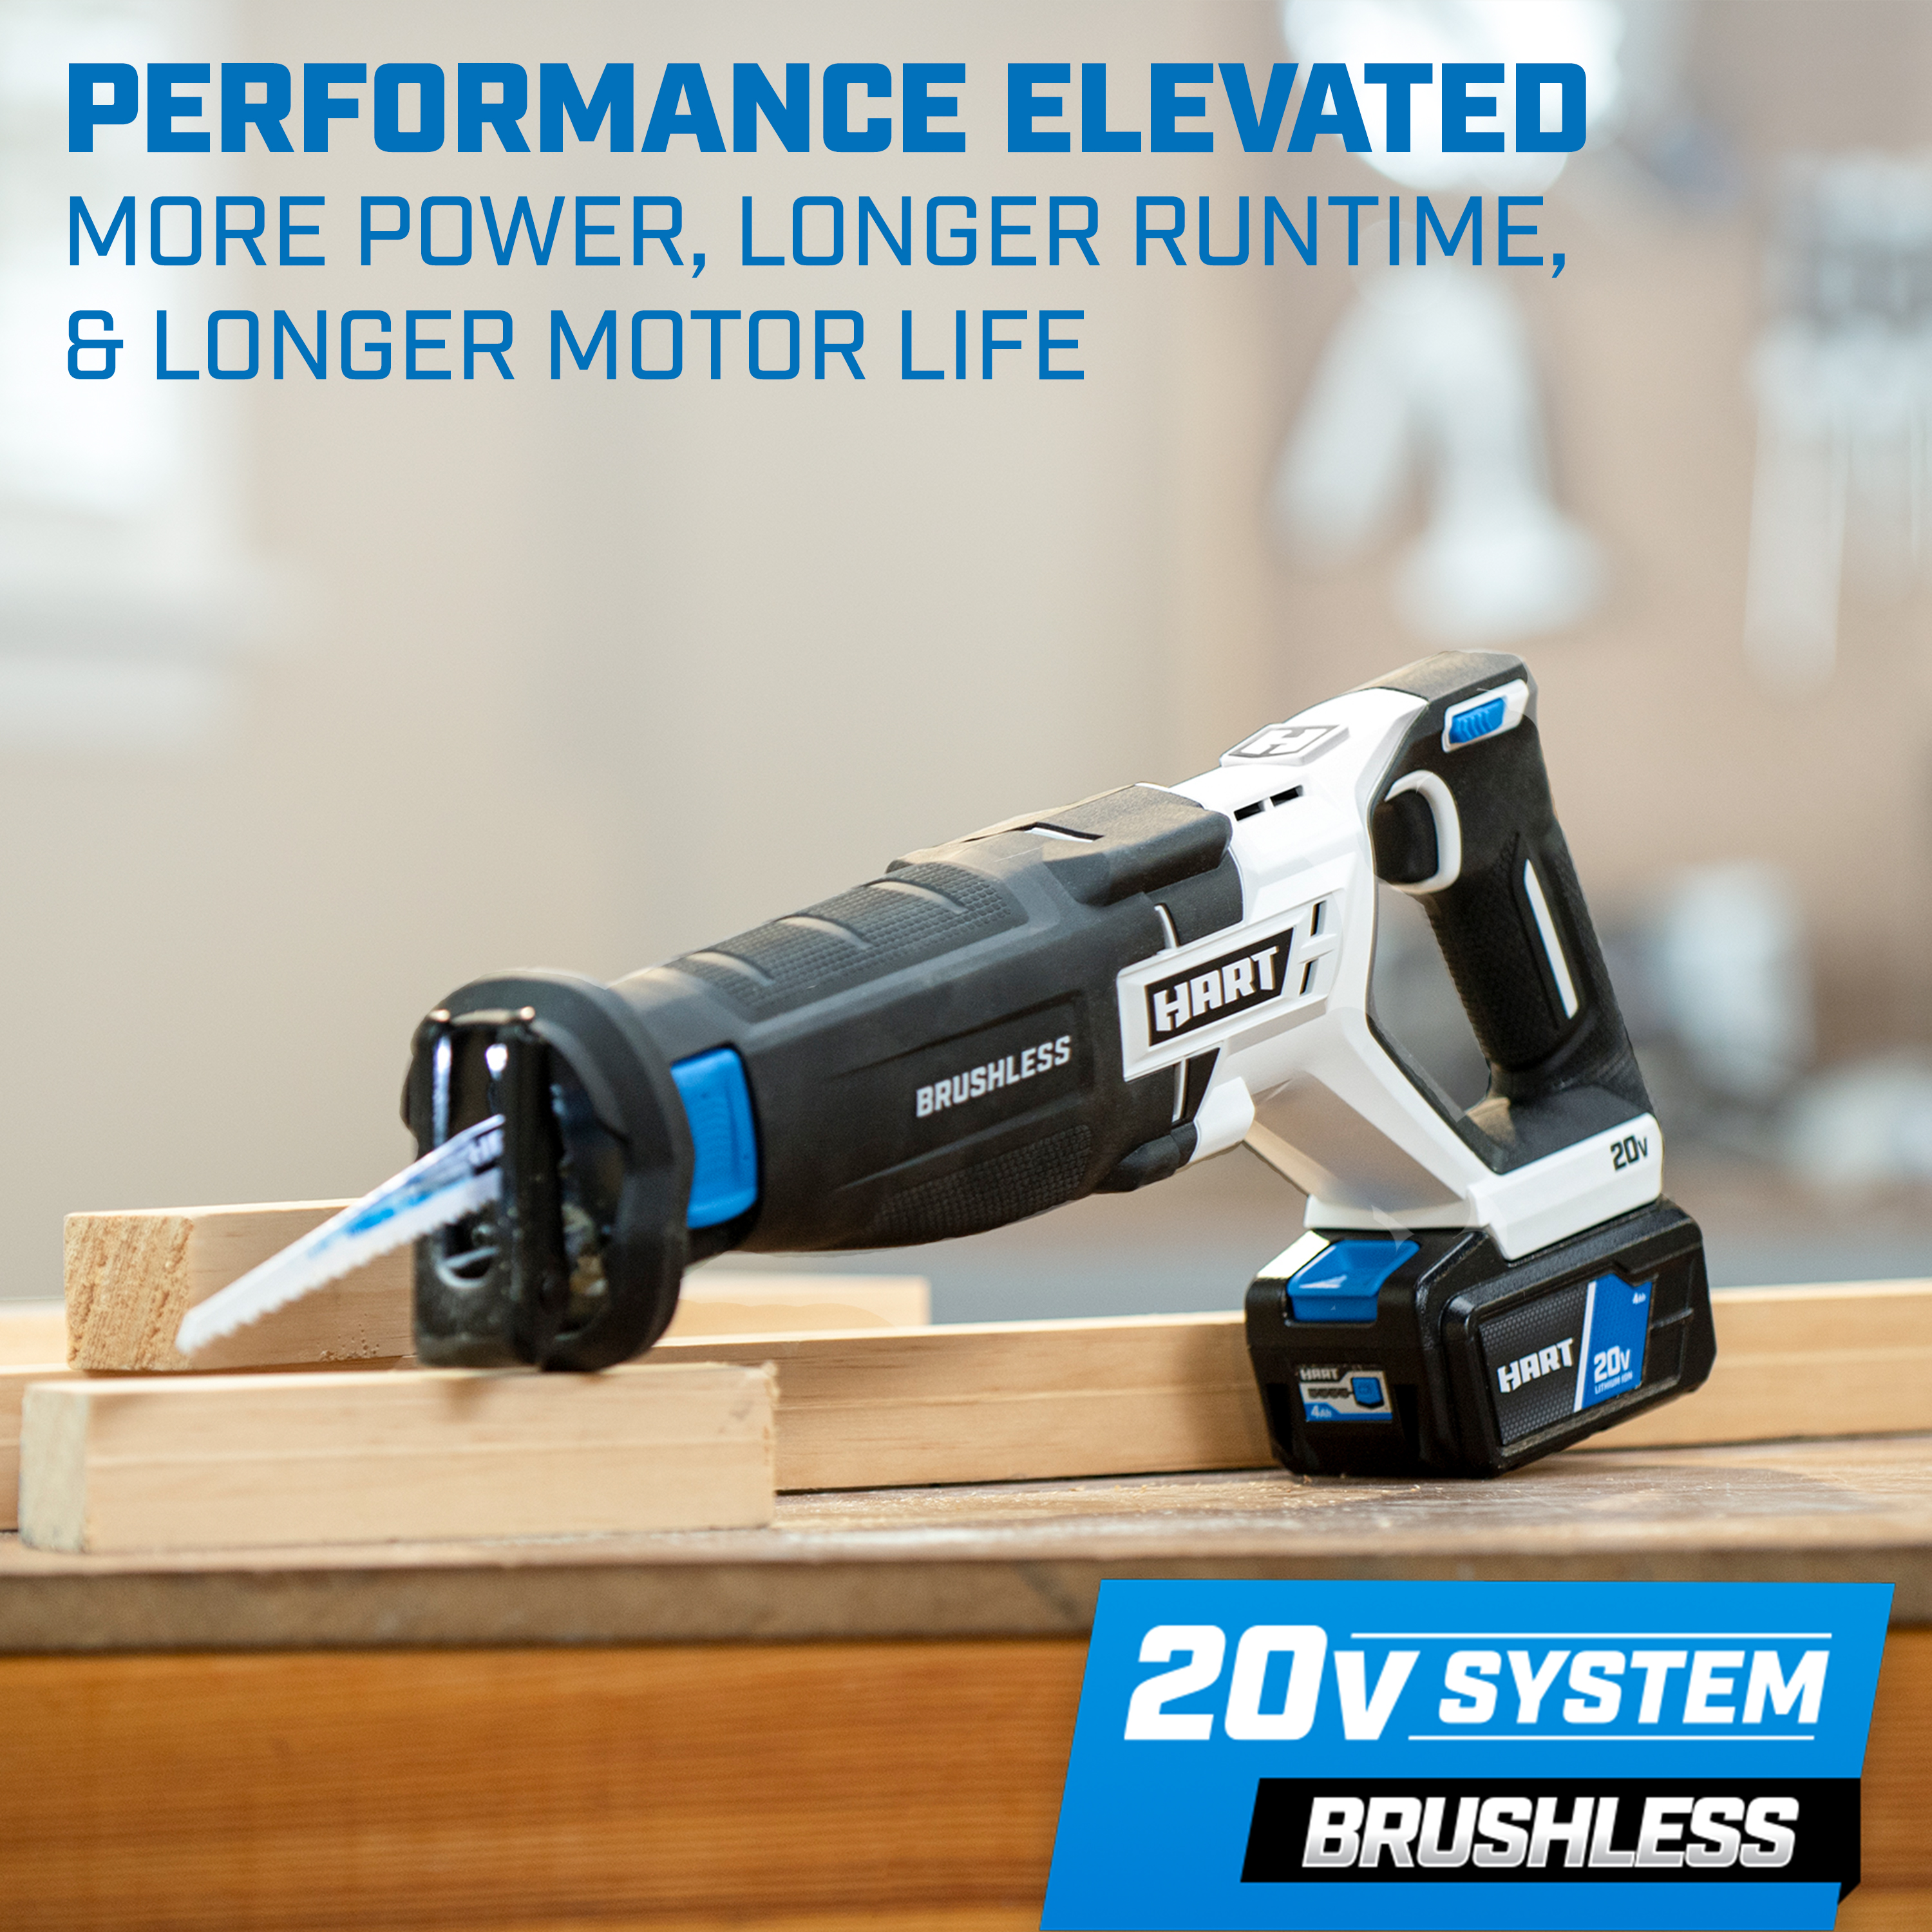 performance elevated mower power, longer runtime, and longer motor life